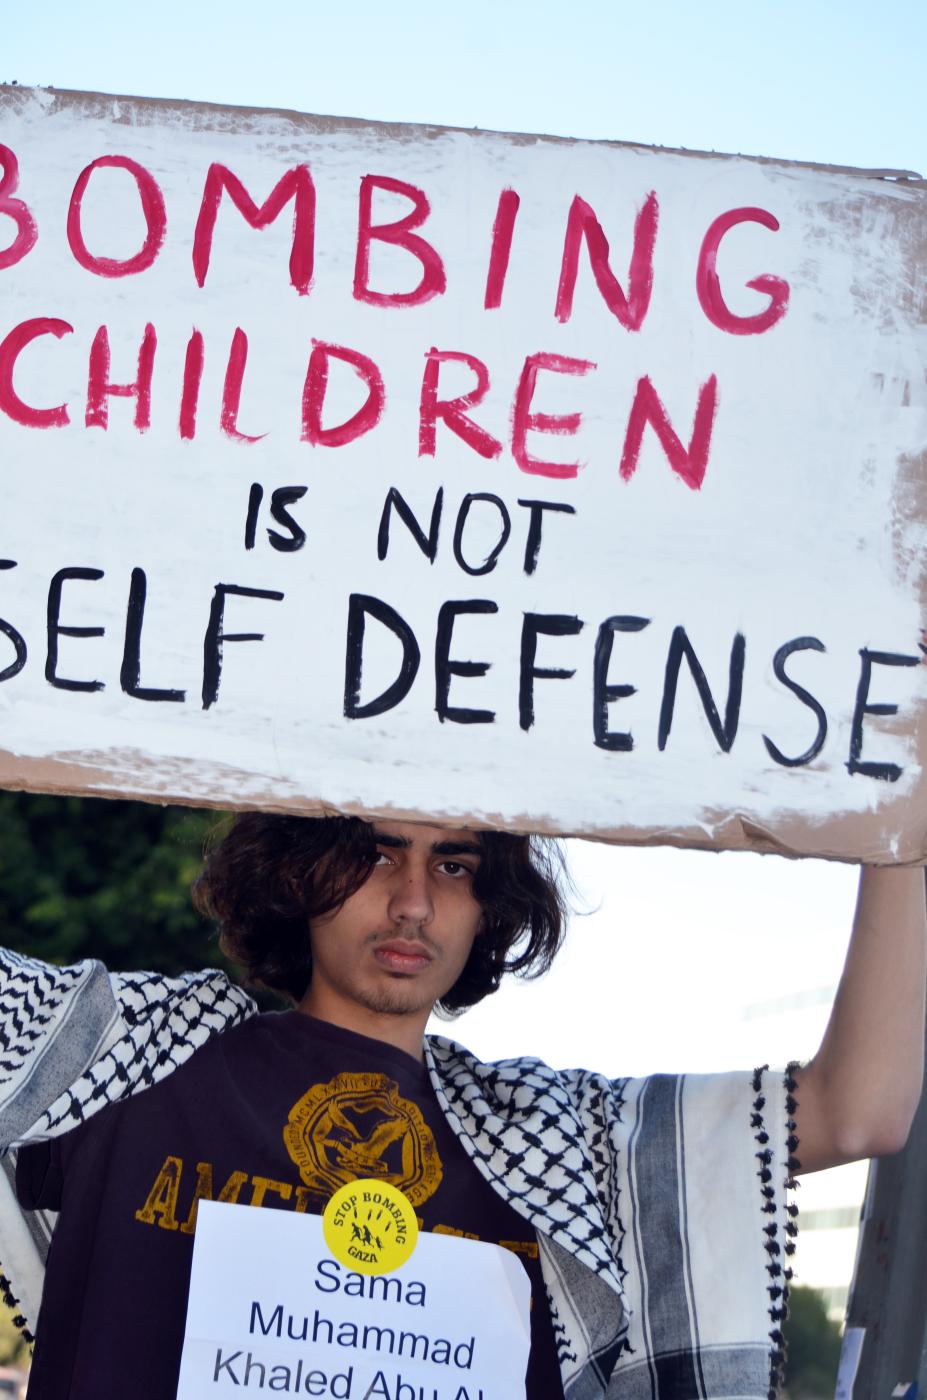 Bombing Children Is Not Self Defense | Buy this image